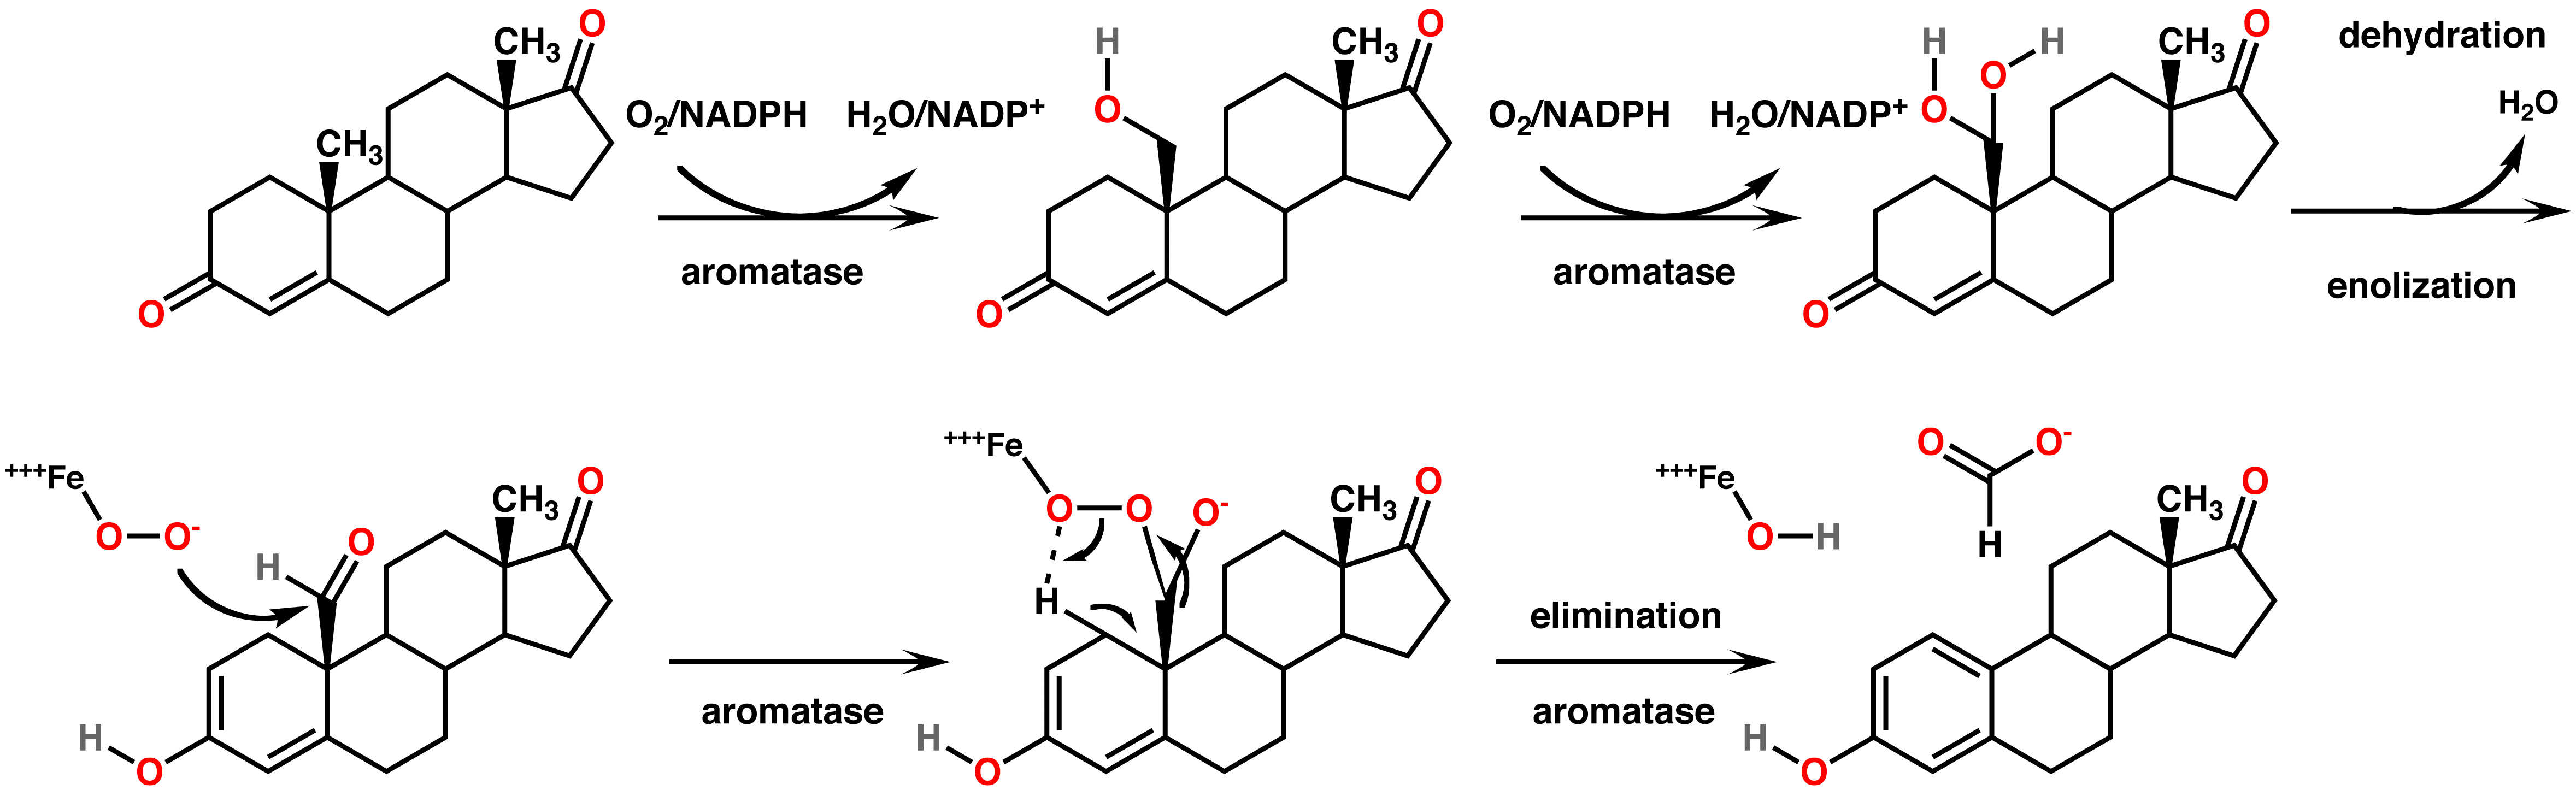 File:Aromatase mechanism.png